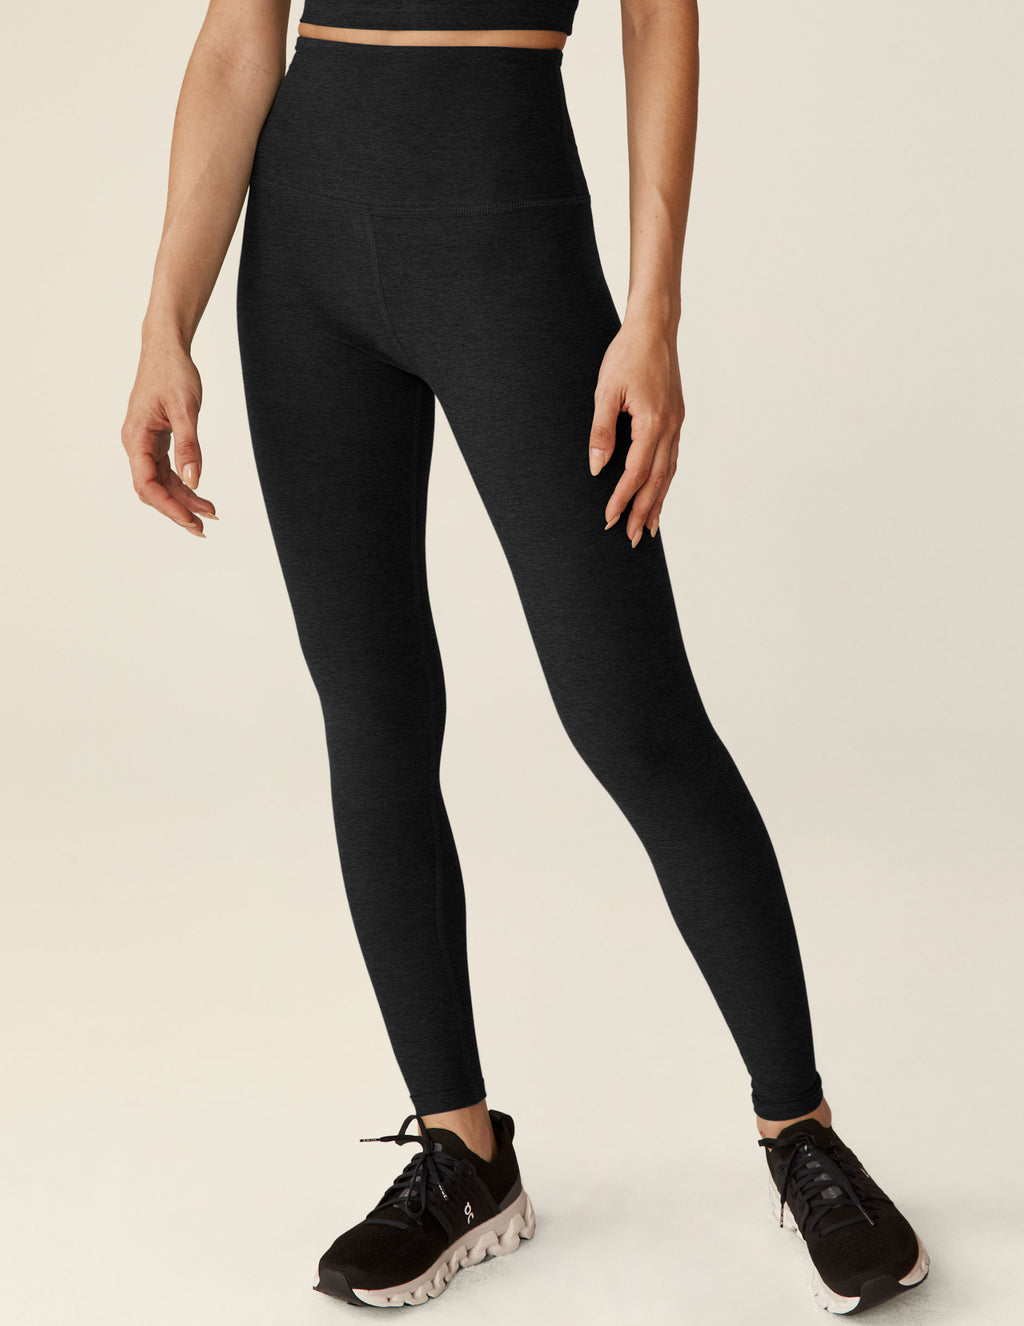 ACHEVEEPET Women's Workout Biker Shorts - Running Yoga Gym Active Basic  Sort Leggings 7” Inseam High Waist Bike Pants, Fuchsia, Small : Amazon.in:  कपड़े और एक्सेसरीज़